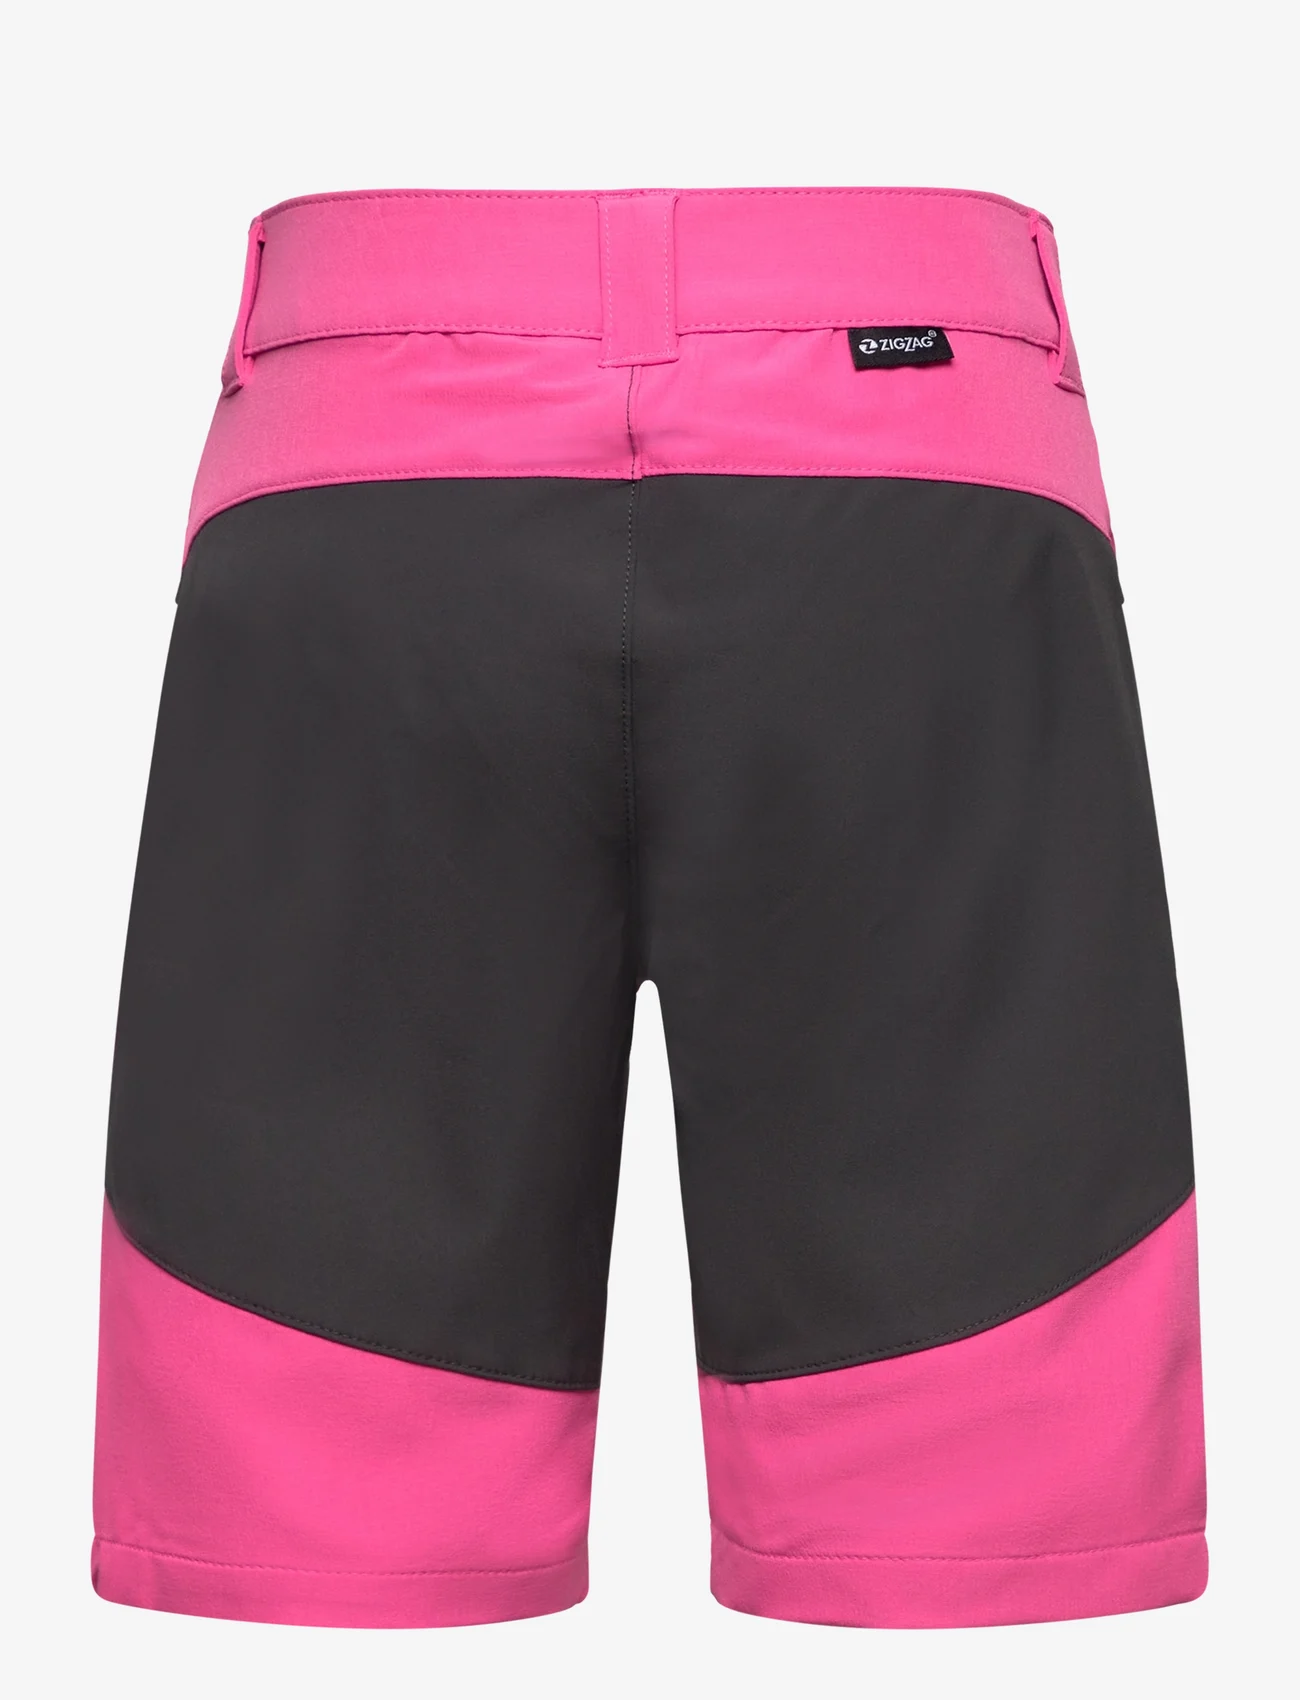 ZigZag - Scorpio Outdoor Shorts - sportsshorts - shocking pink - 1